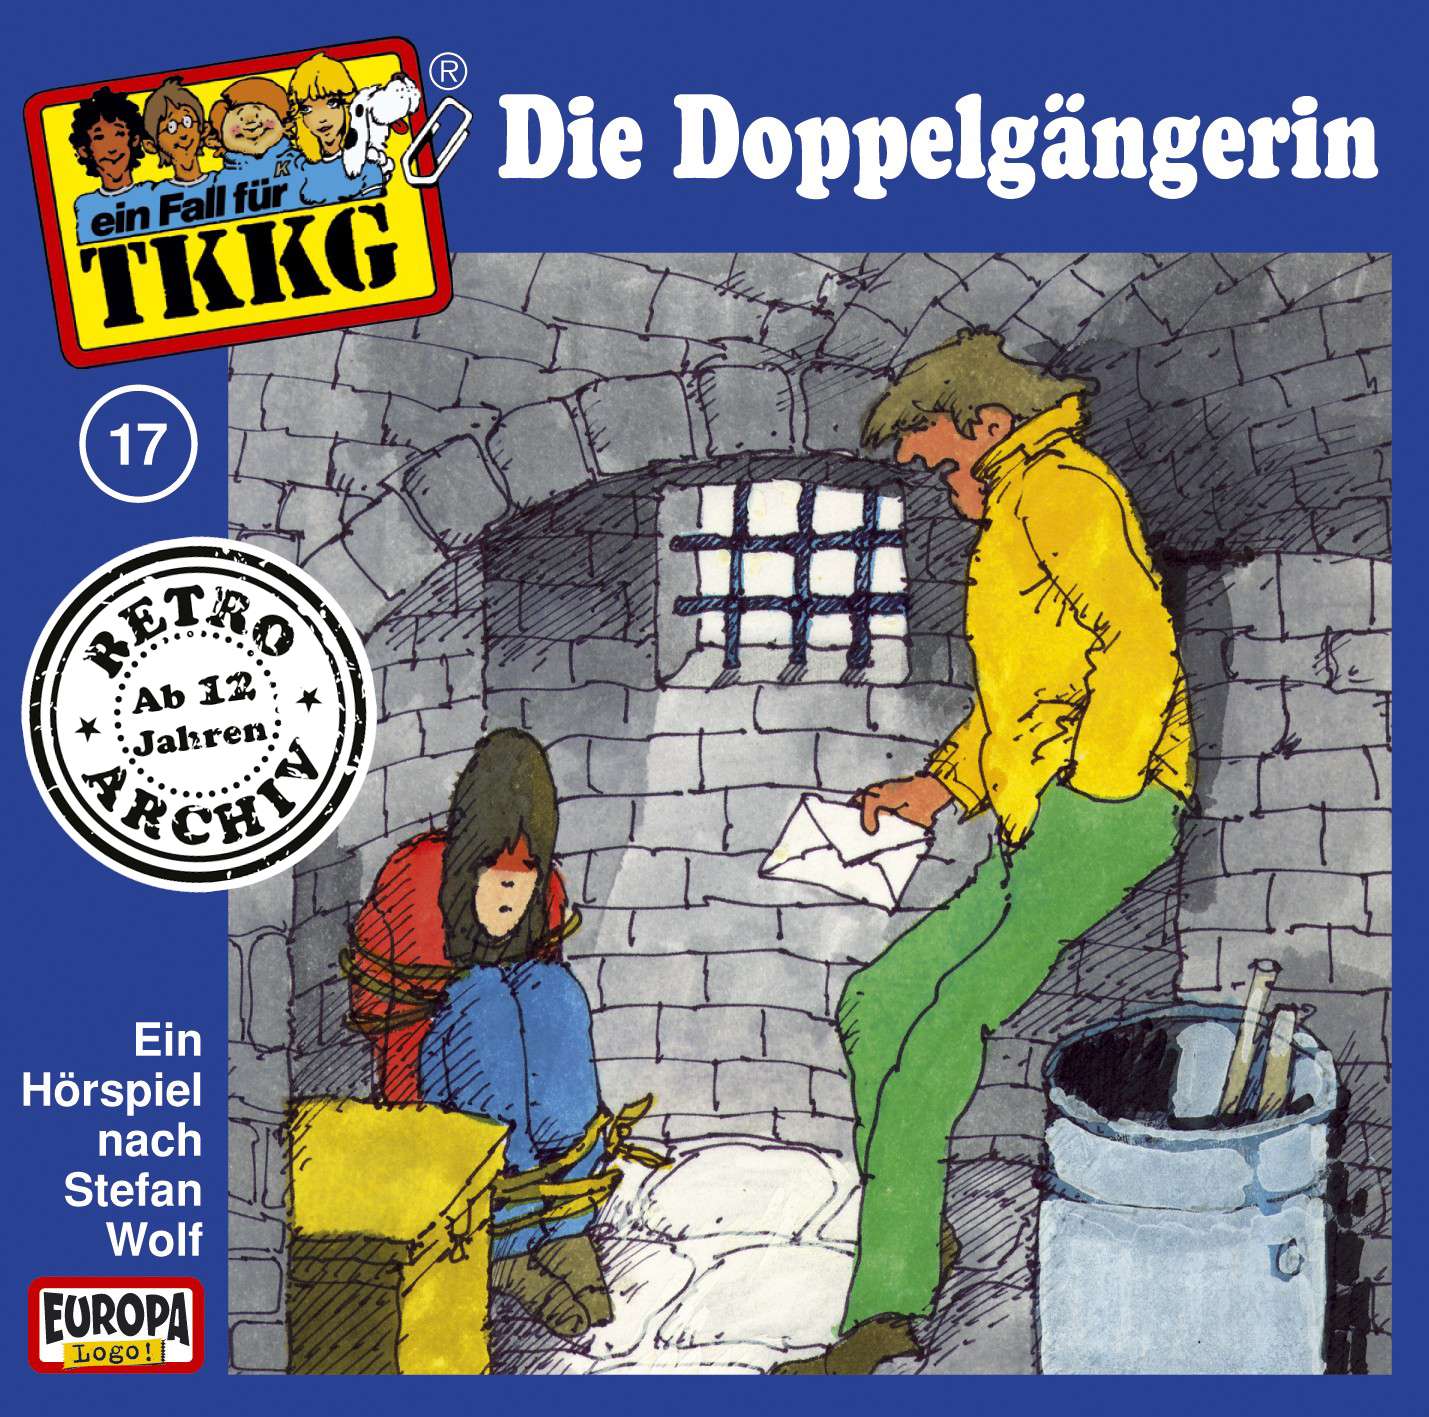 TKKG Retro-Archiv - Die Doppelgängerin